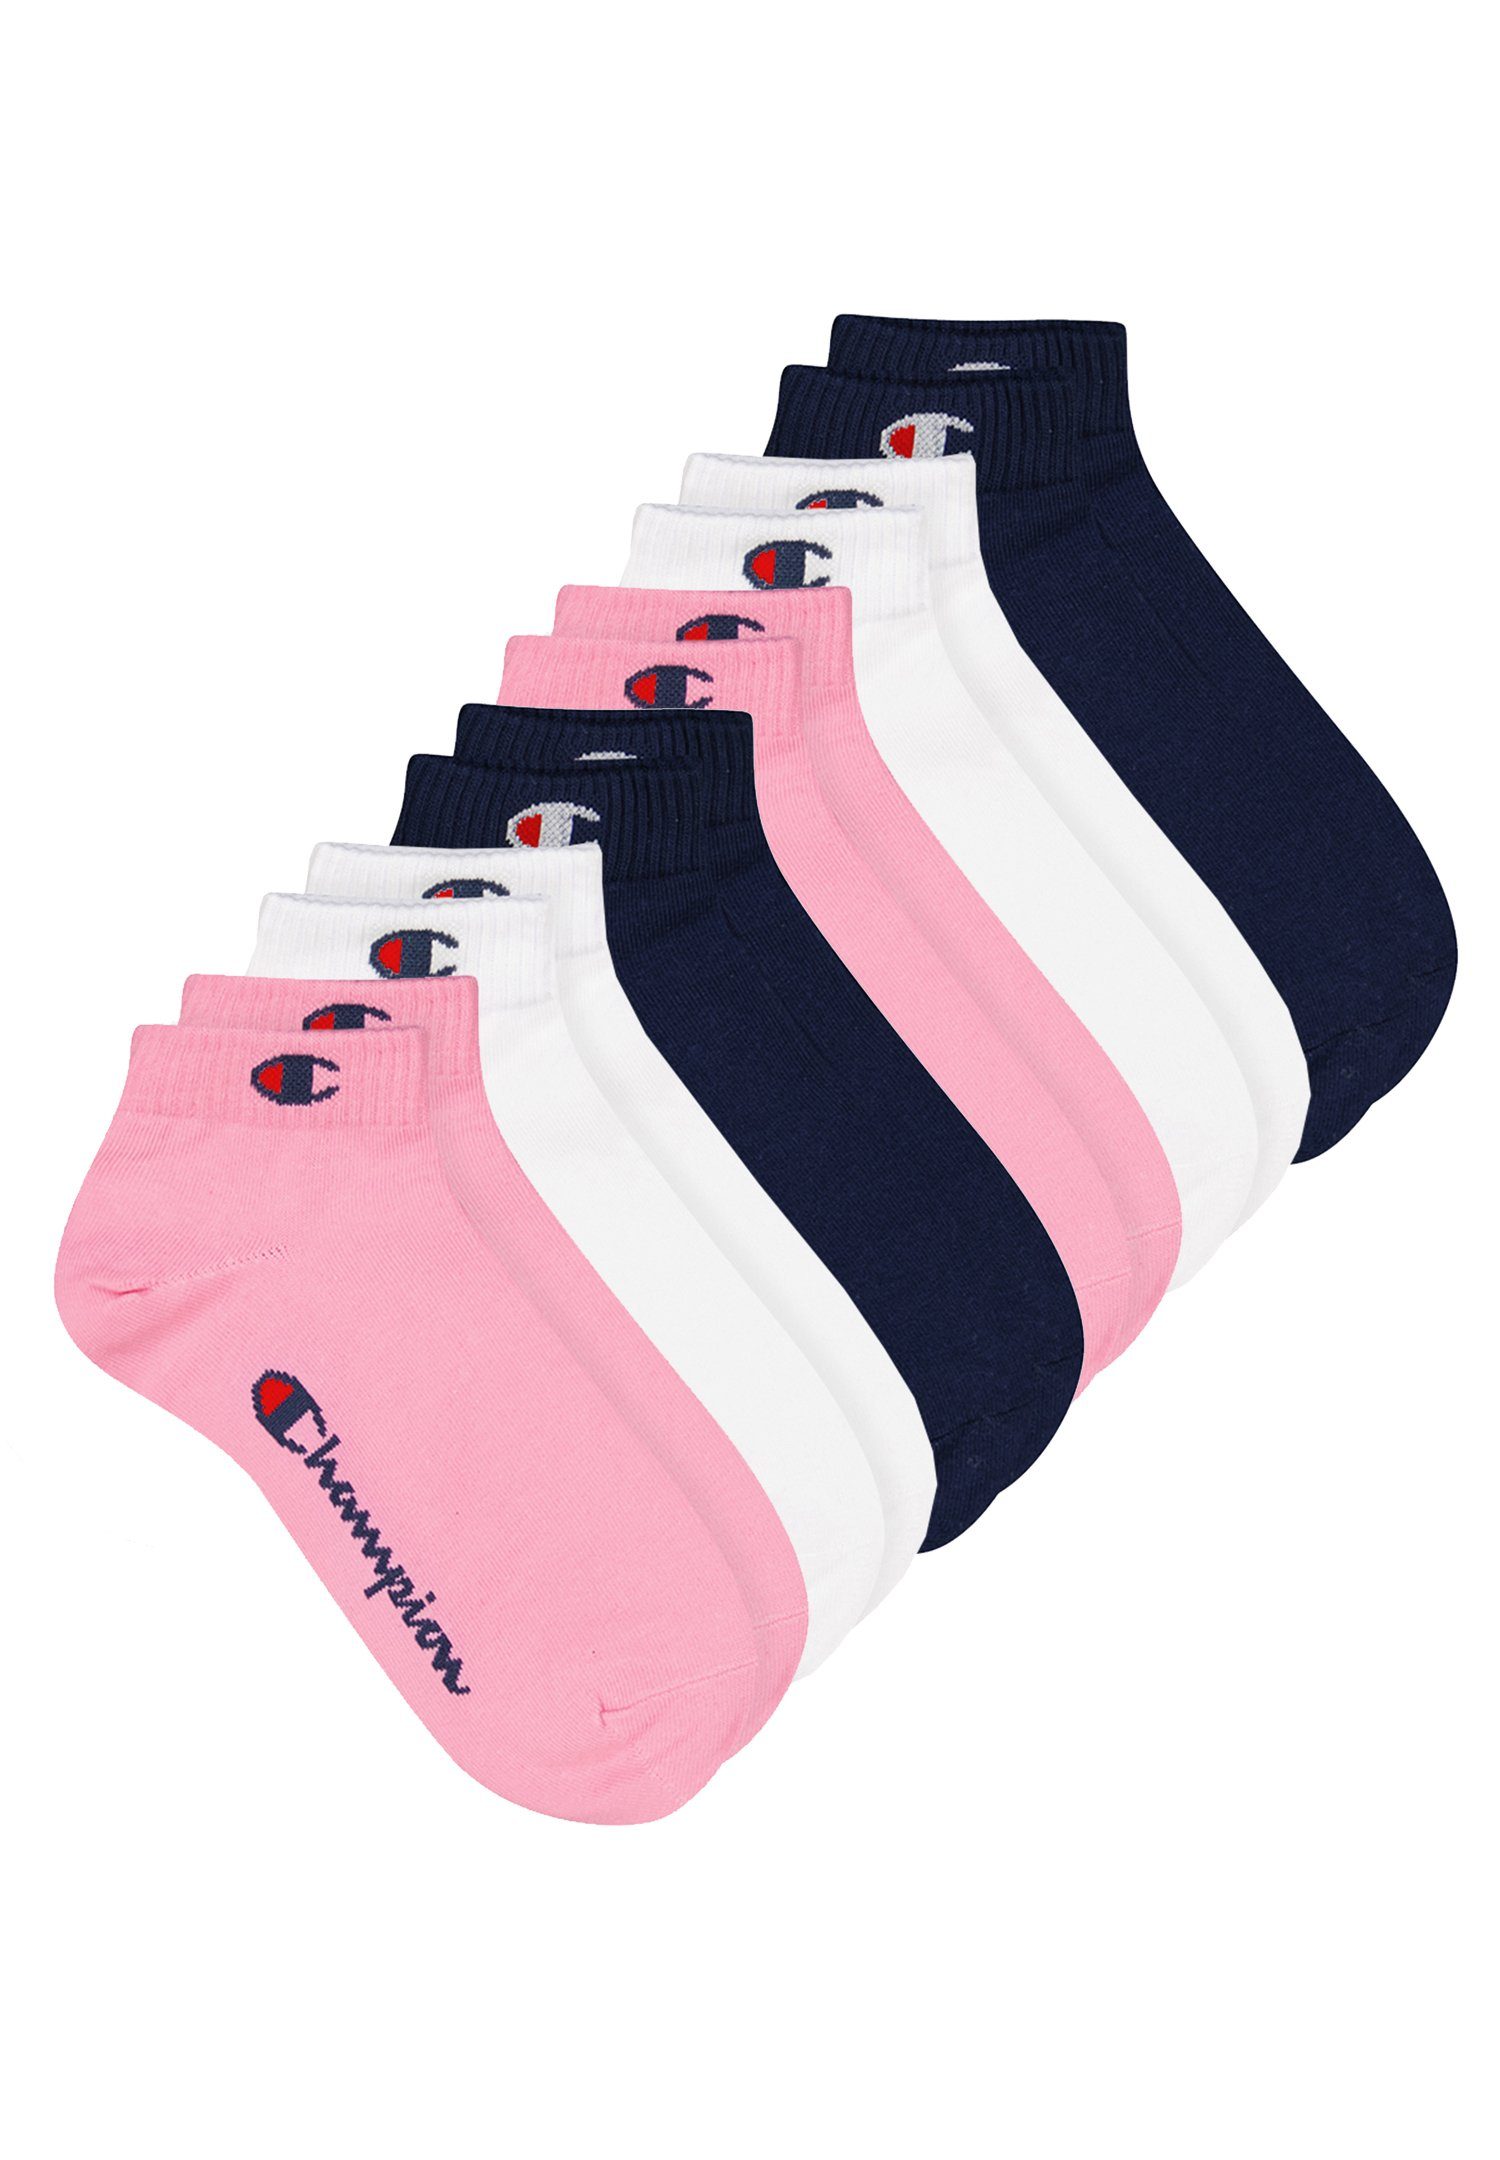 Kurzsocken Champion prism pink - Quarter 6pk 395 (6-Paar) Socks